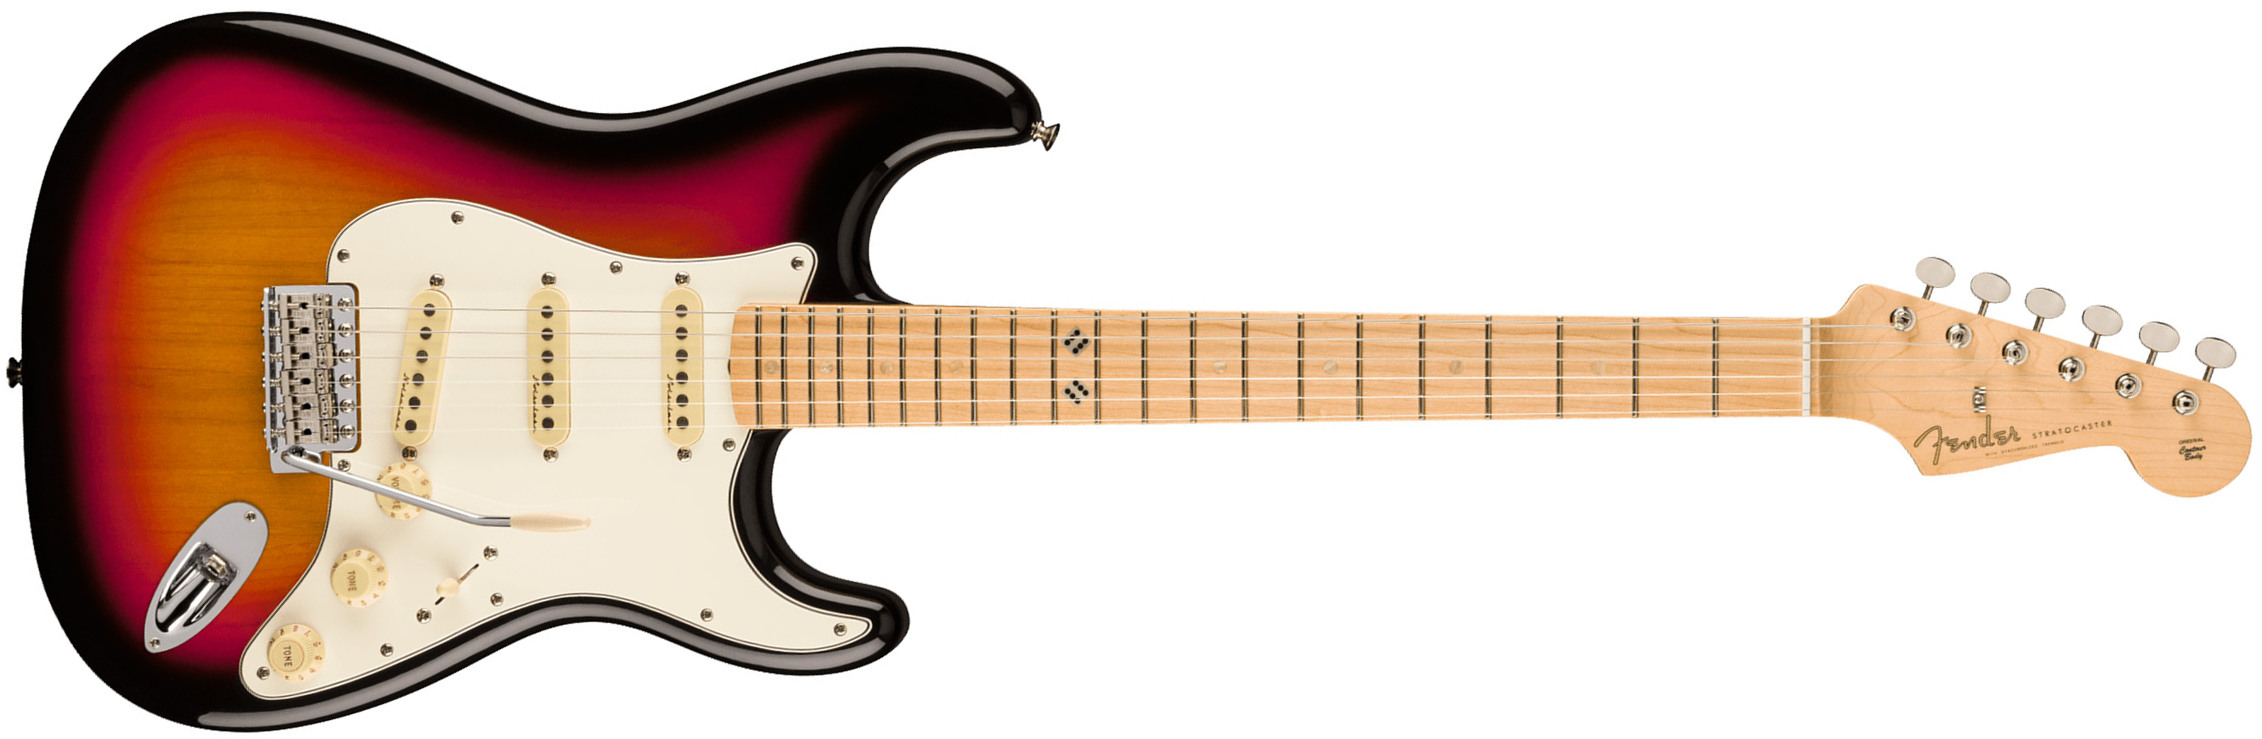 Fender Steve Lacy Strat People Pleaser Mex Signature 3s Trem Mn - Chaos Burst - Str shape electric guitar - Main picture